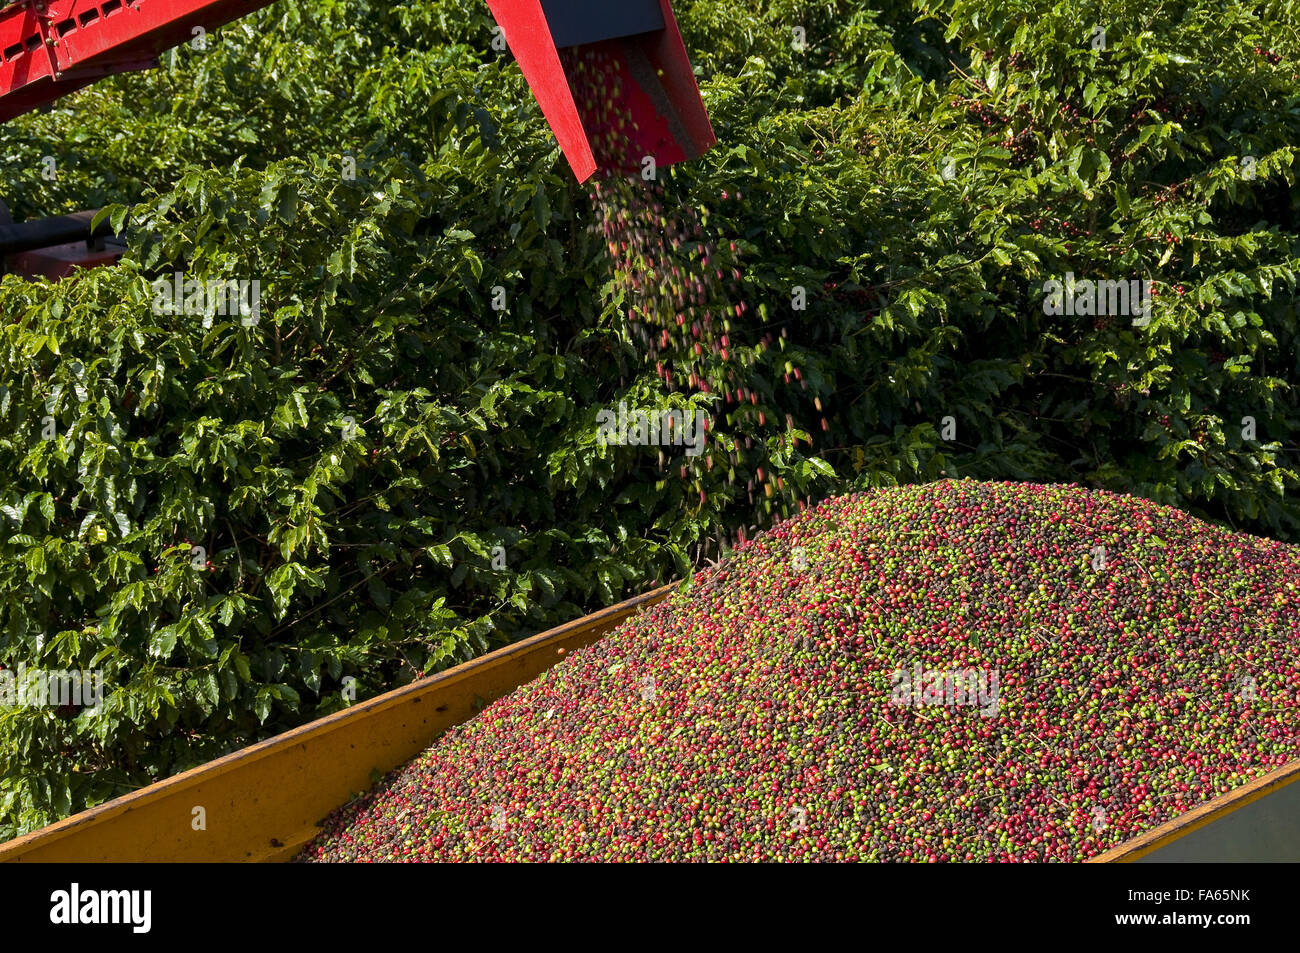 Mechanical harvesting of coffee - Variety New World Stock Photo